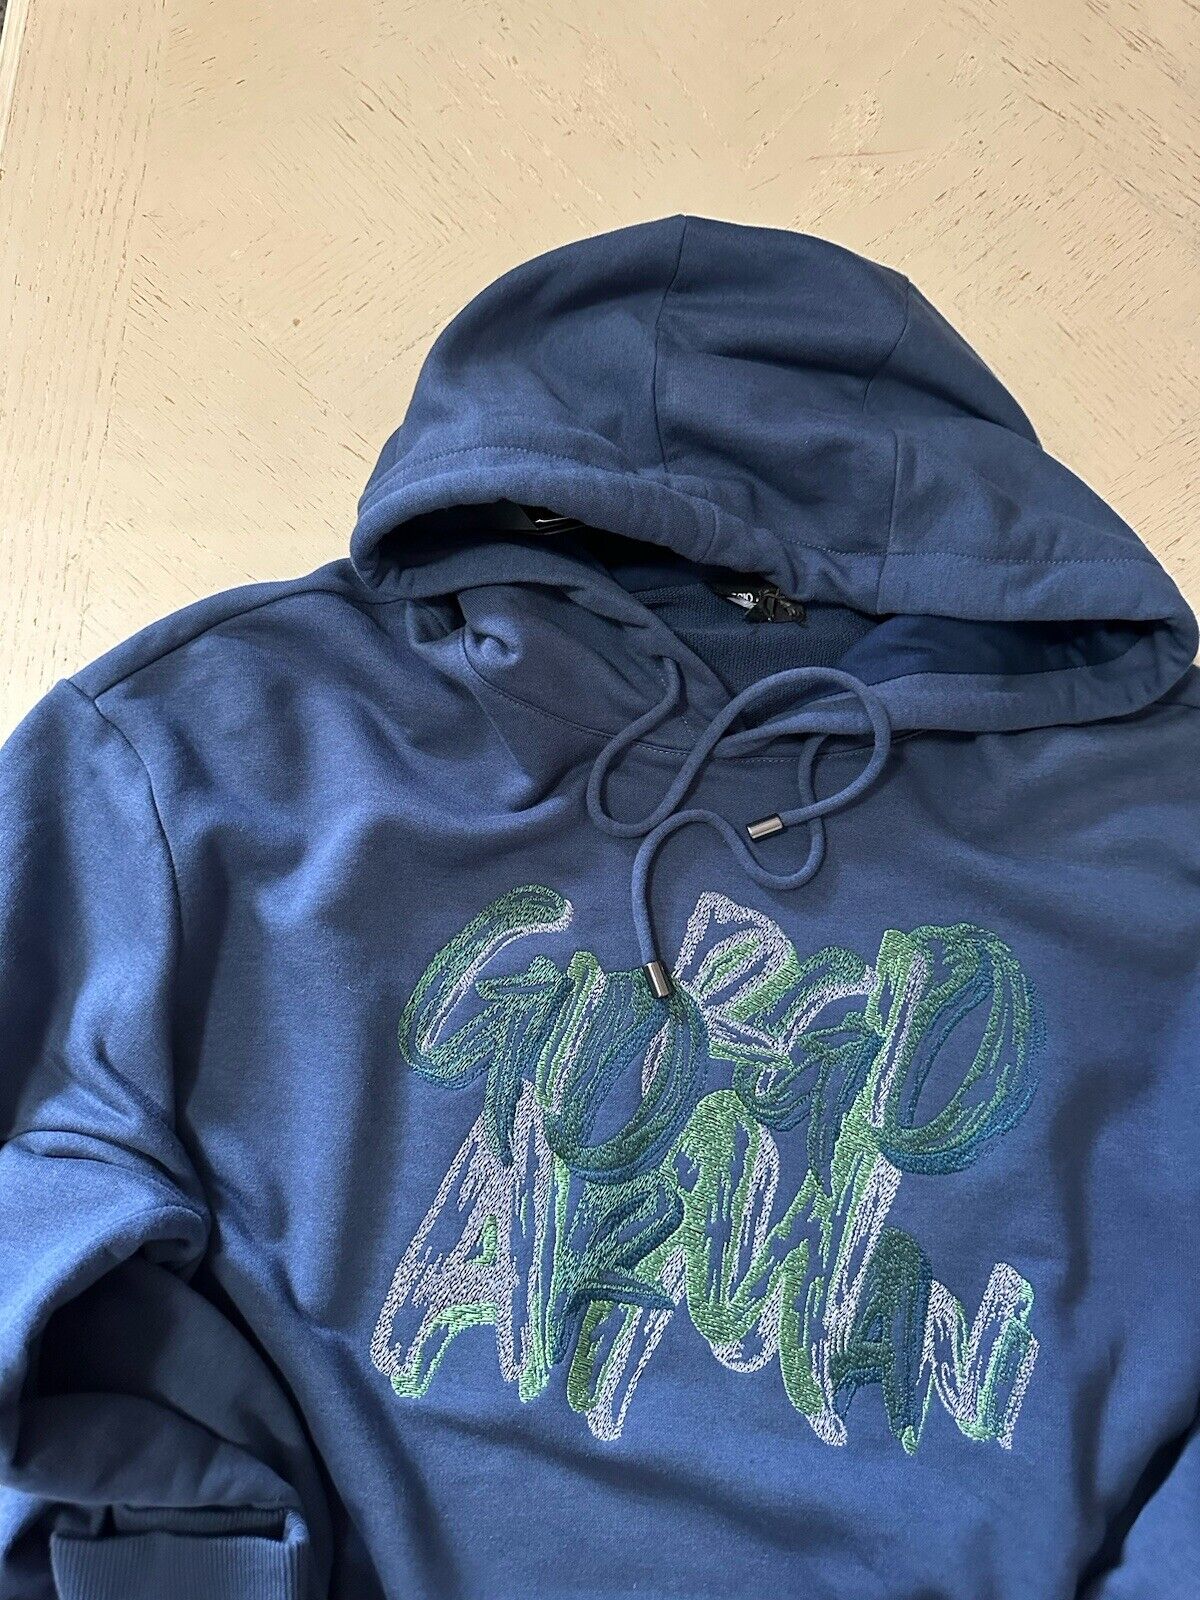 Giorgio Armani Men hoodie Pullover Blue L ( 52 Eu ) Italy NWT $1995